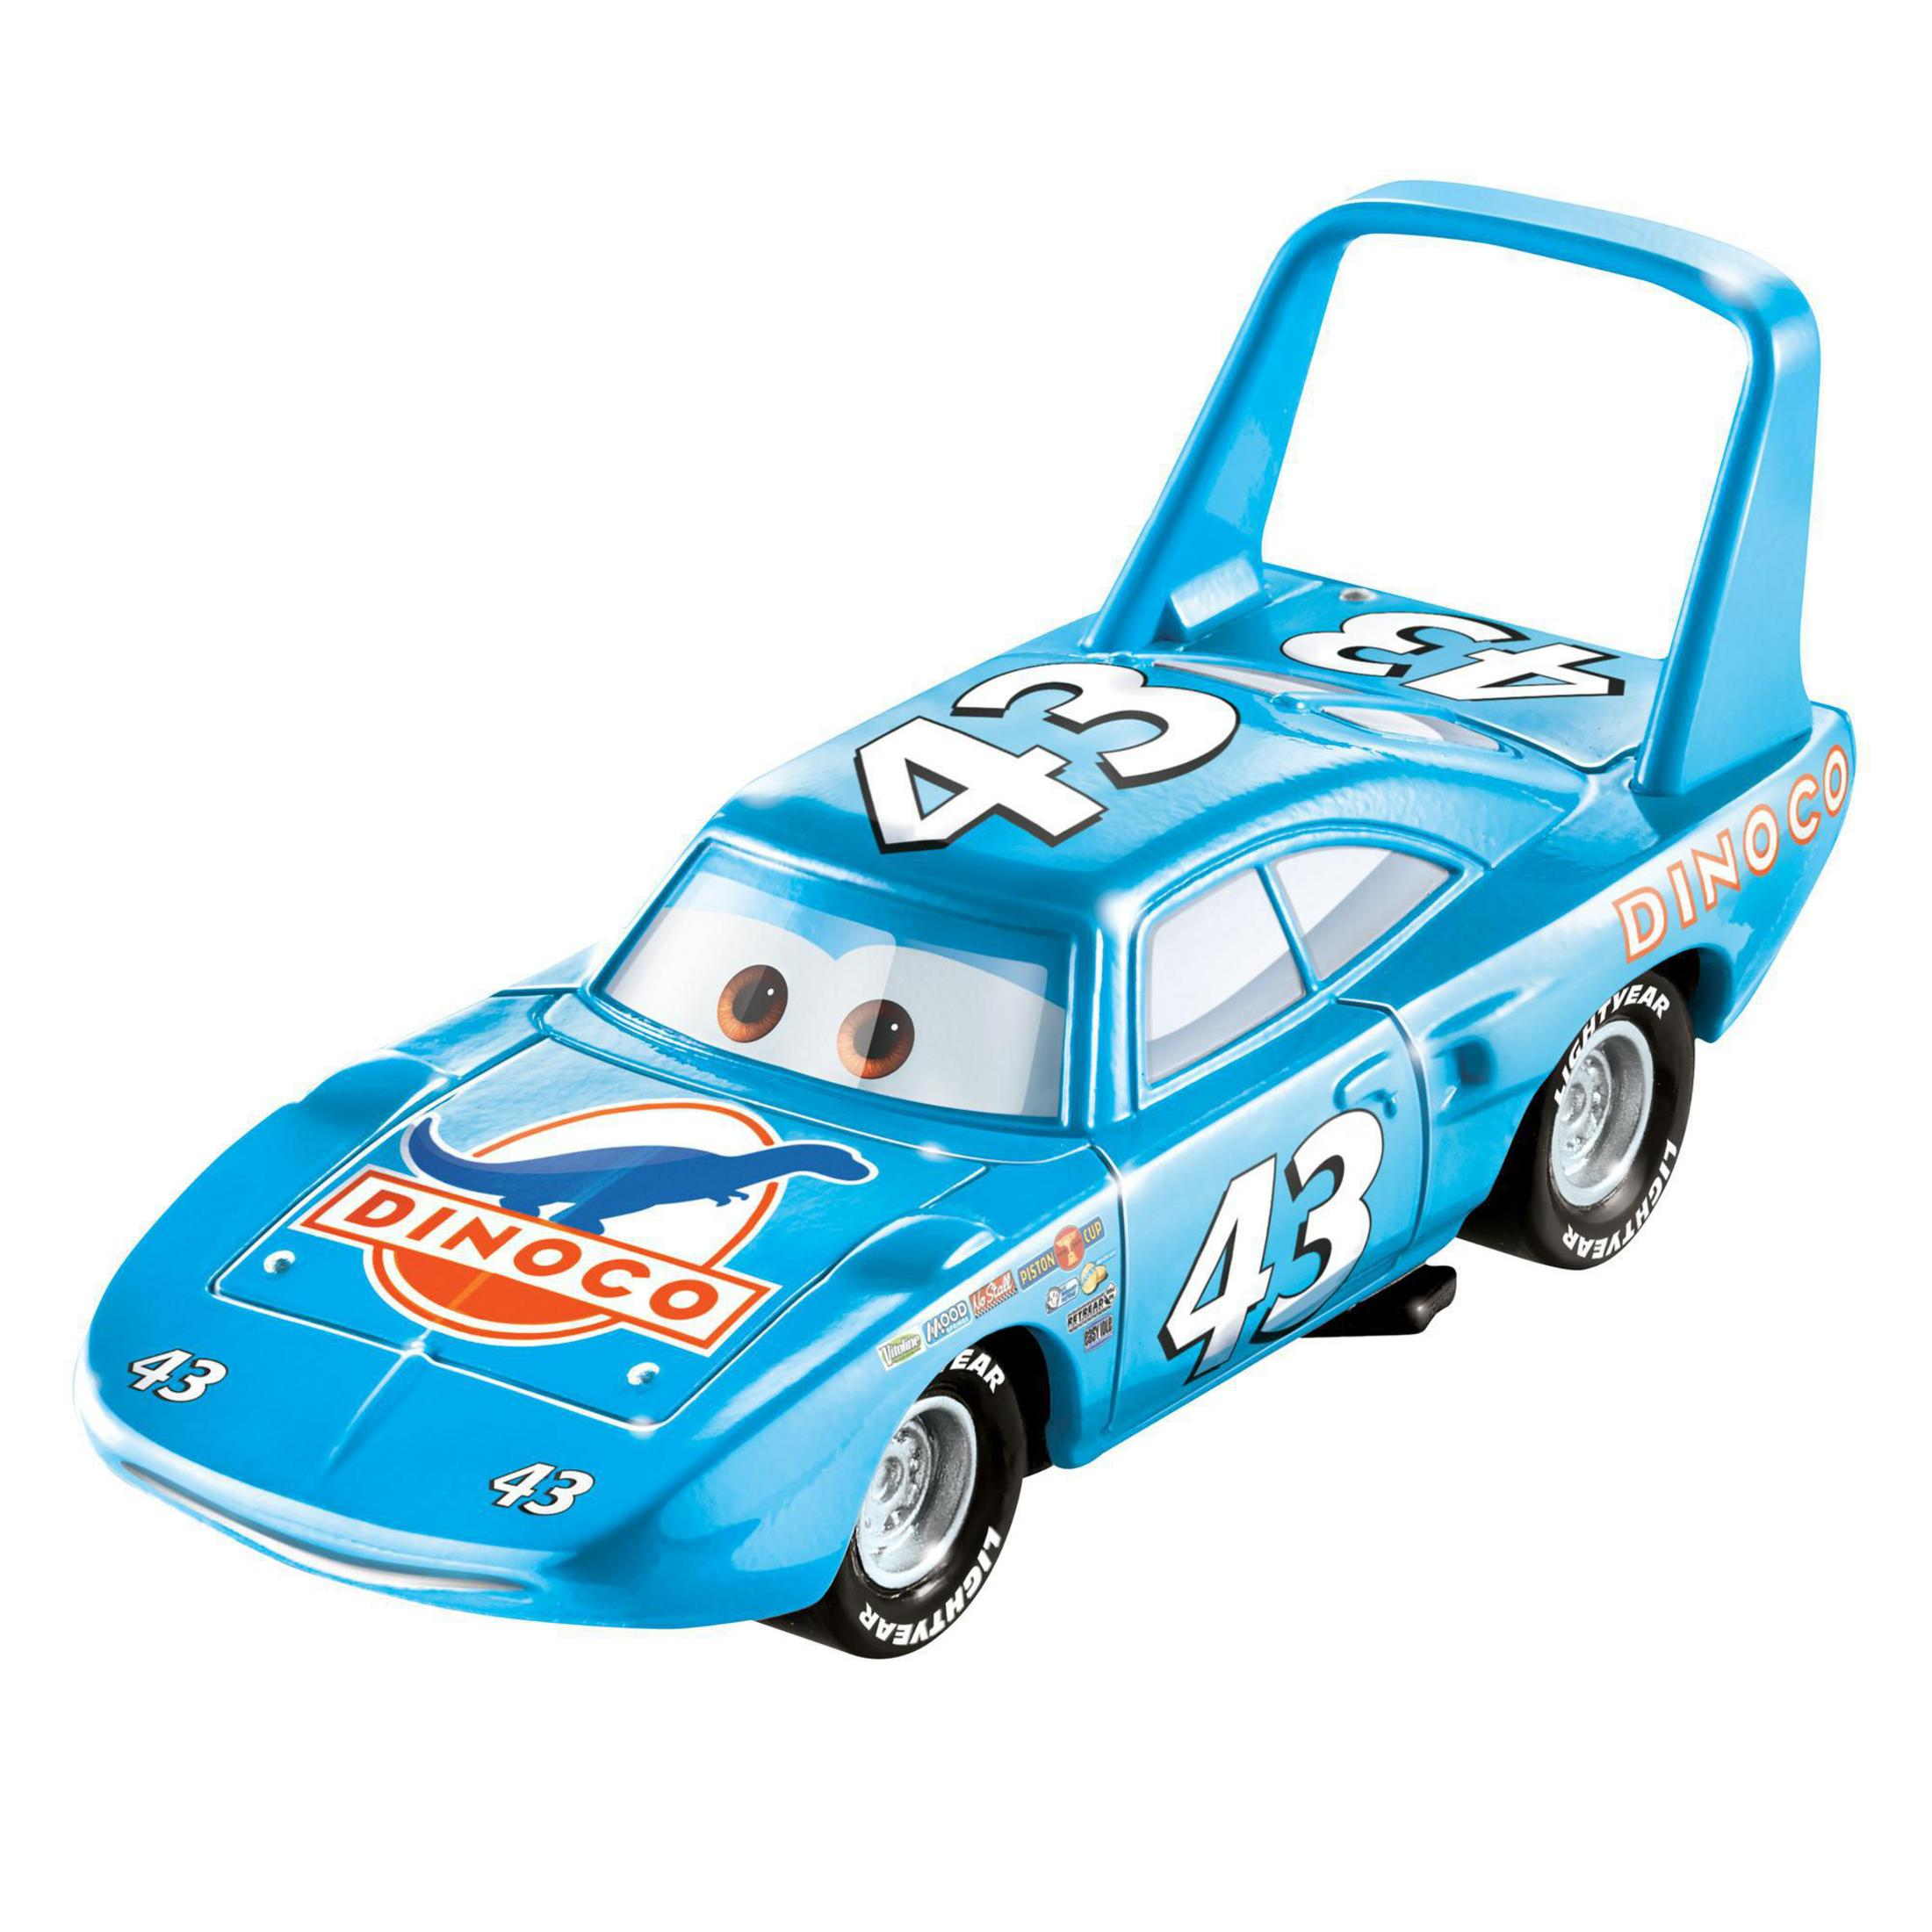 FARBWECHSEL FAHRZEUGE SORTIMENT Mehrfarbig GYM69 Spielzeugauto CARS